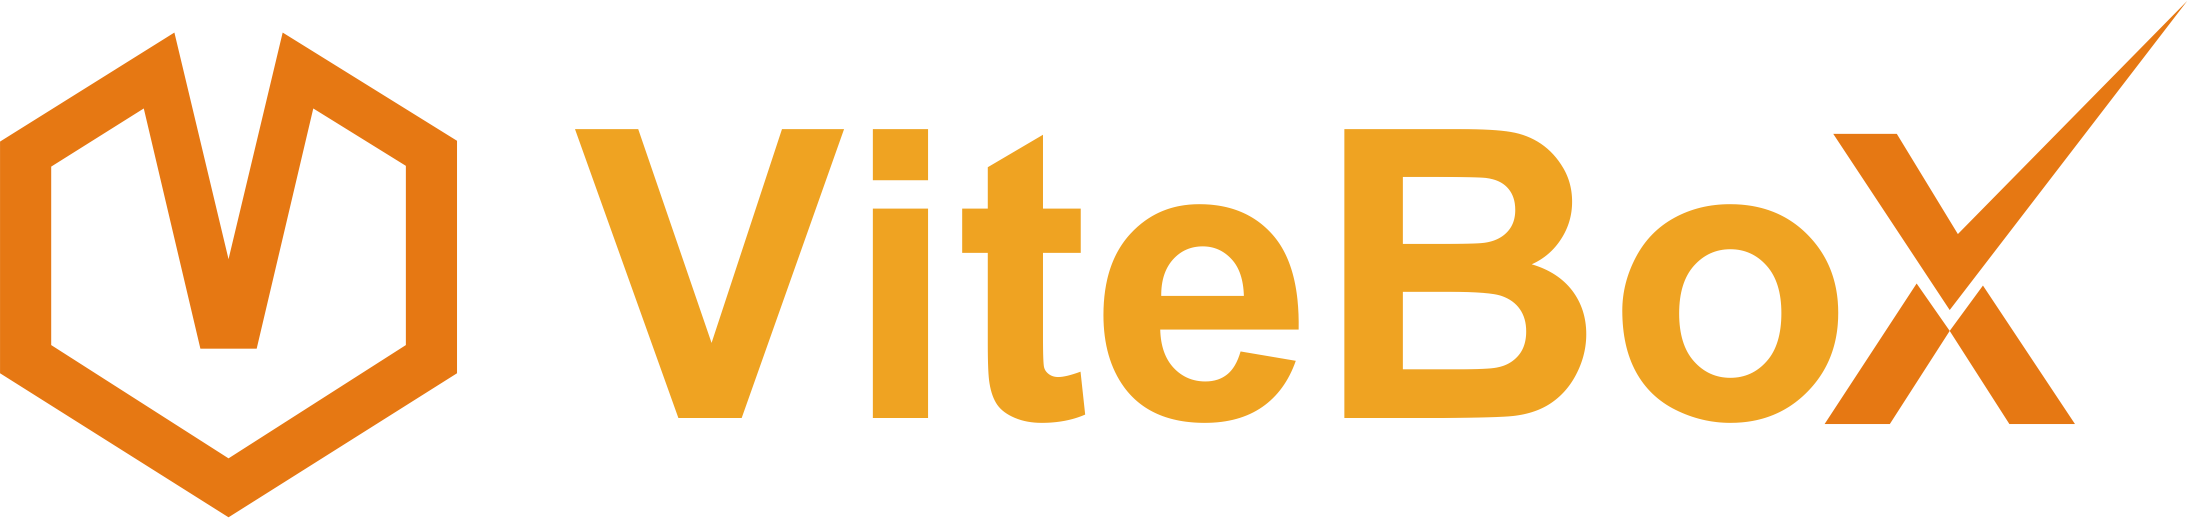 Vite-Box-Logo